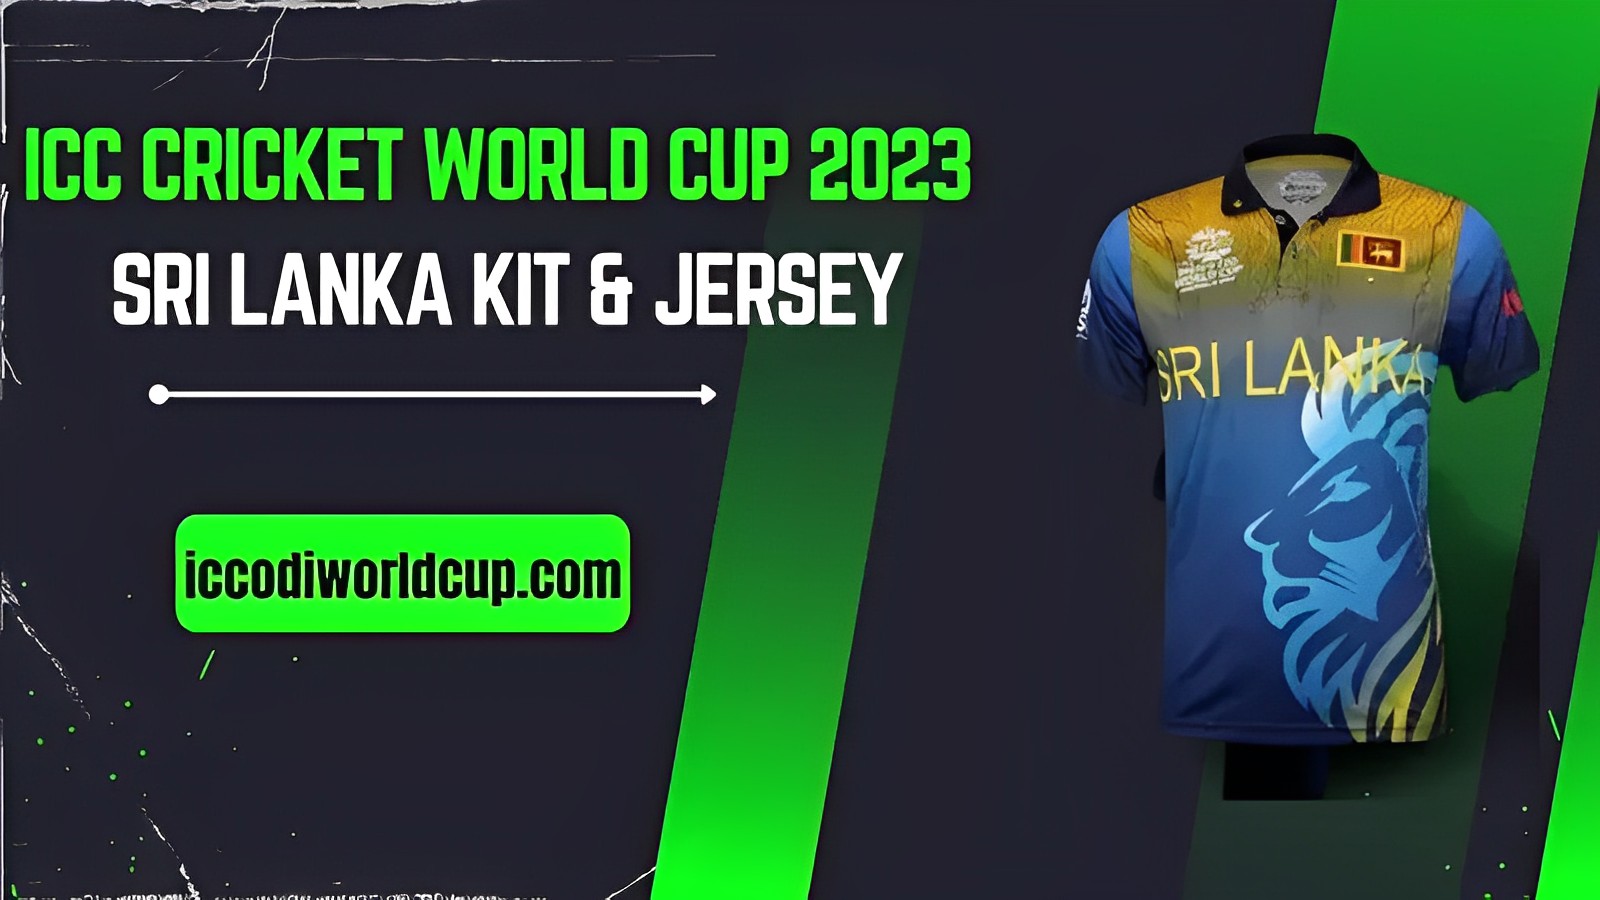 Sir Lanka Team kit